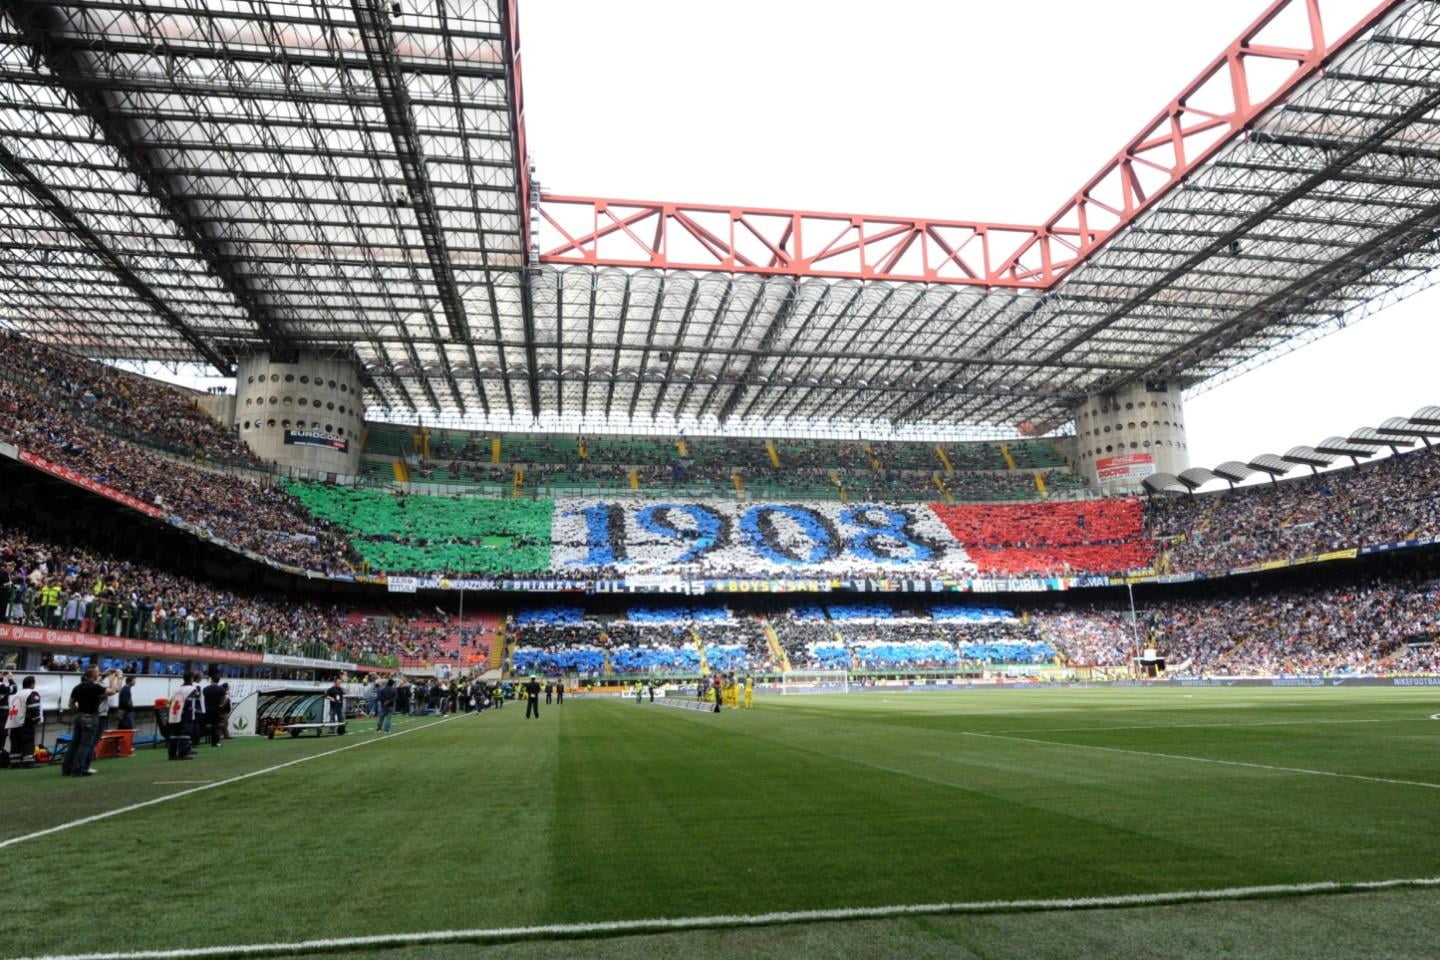 Inter Milan - Udinese, 6 februariden 20:45